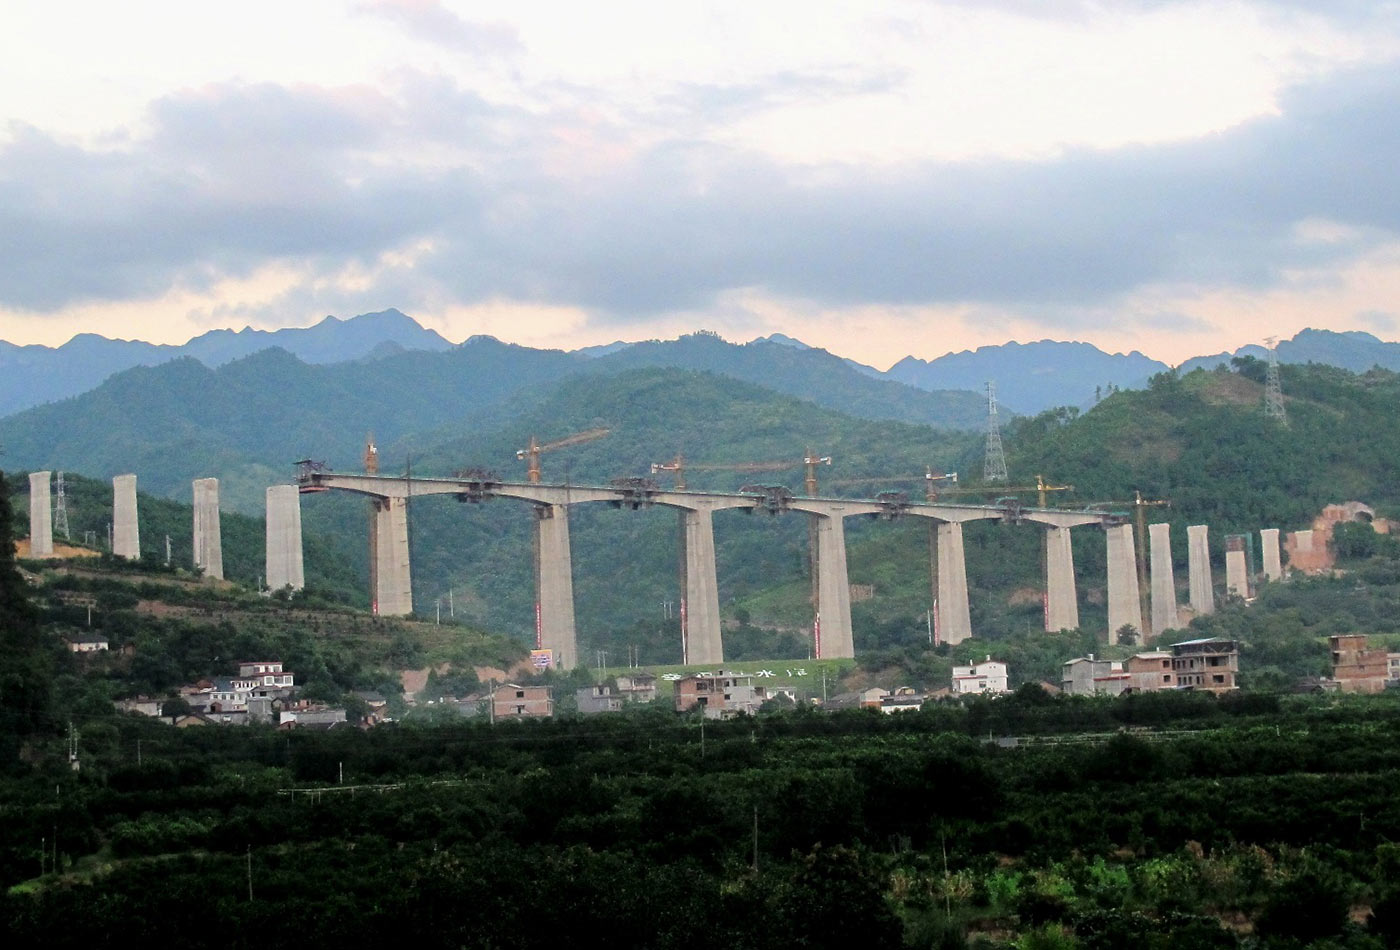 Construction progress on the Guiyang-Guangzhou high-speed railway.